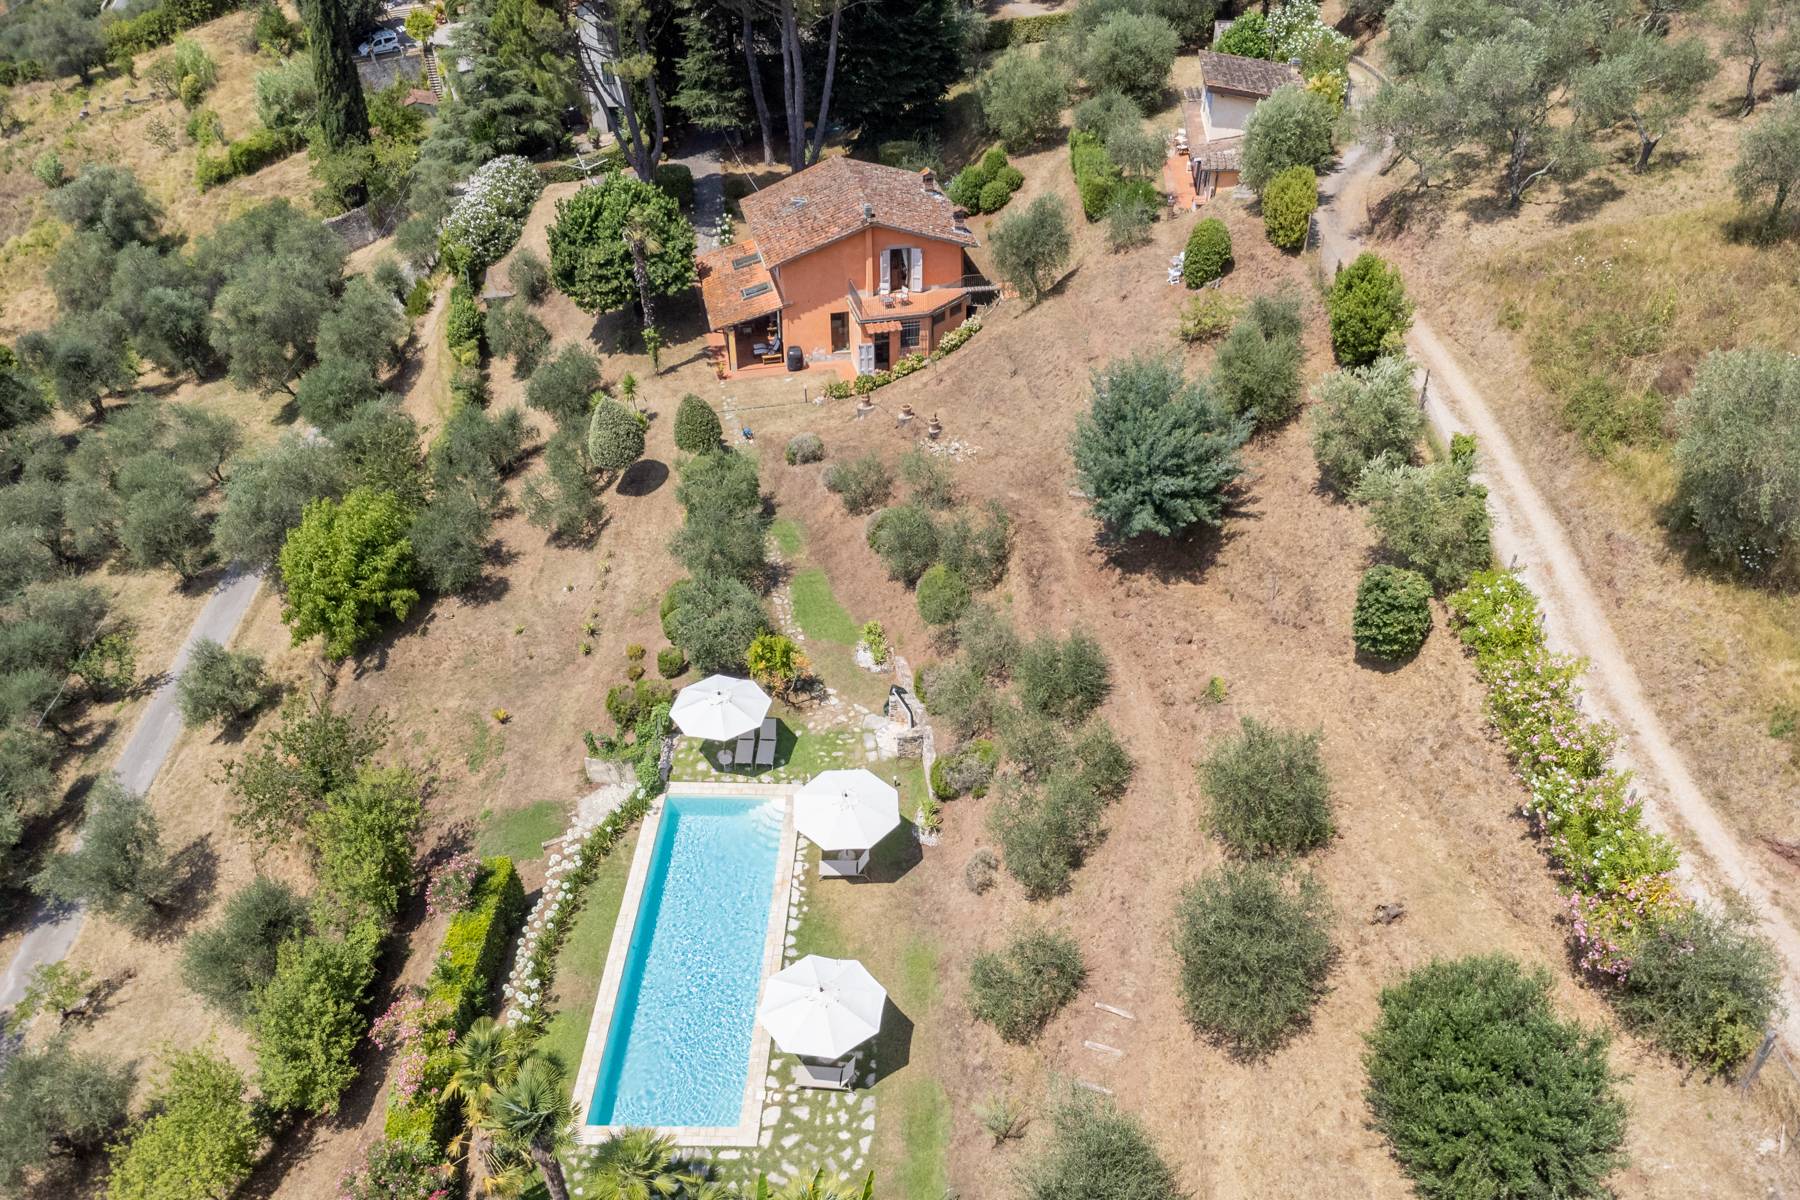 Villa in Vendita a Lucca: 5 locali, 220 mq - Foto 28